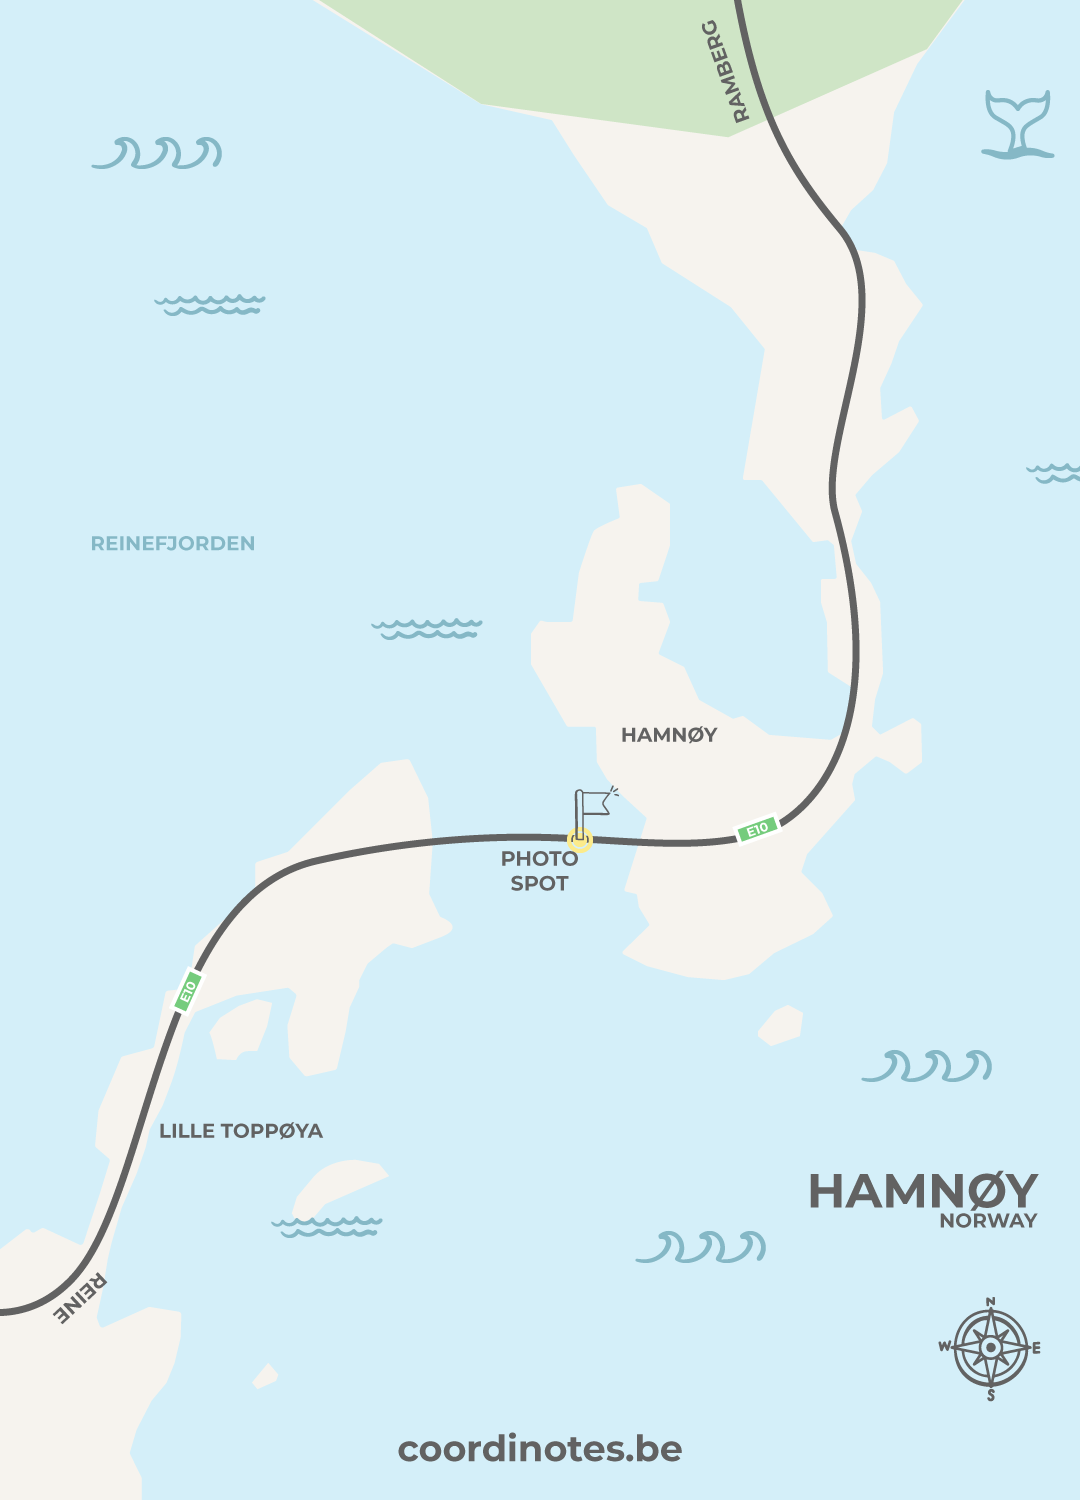 Map for the Hamnøy photo spot